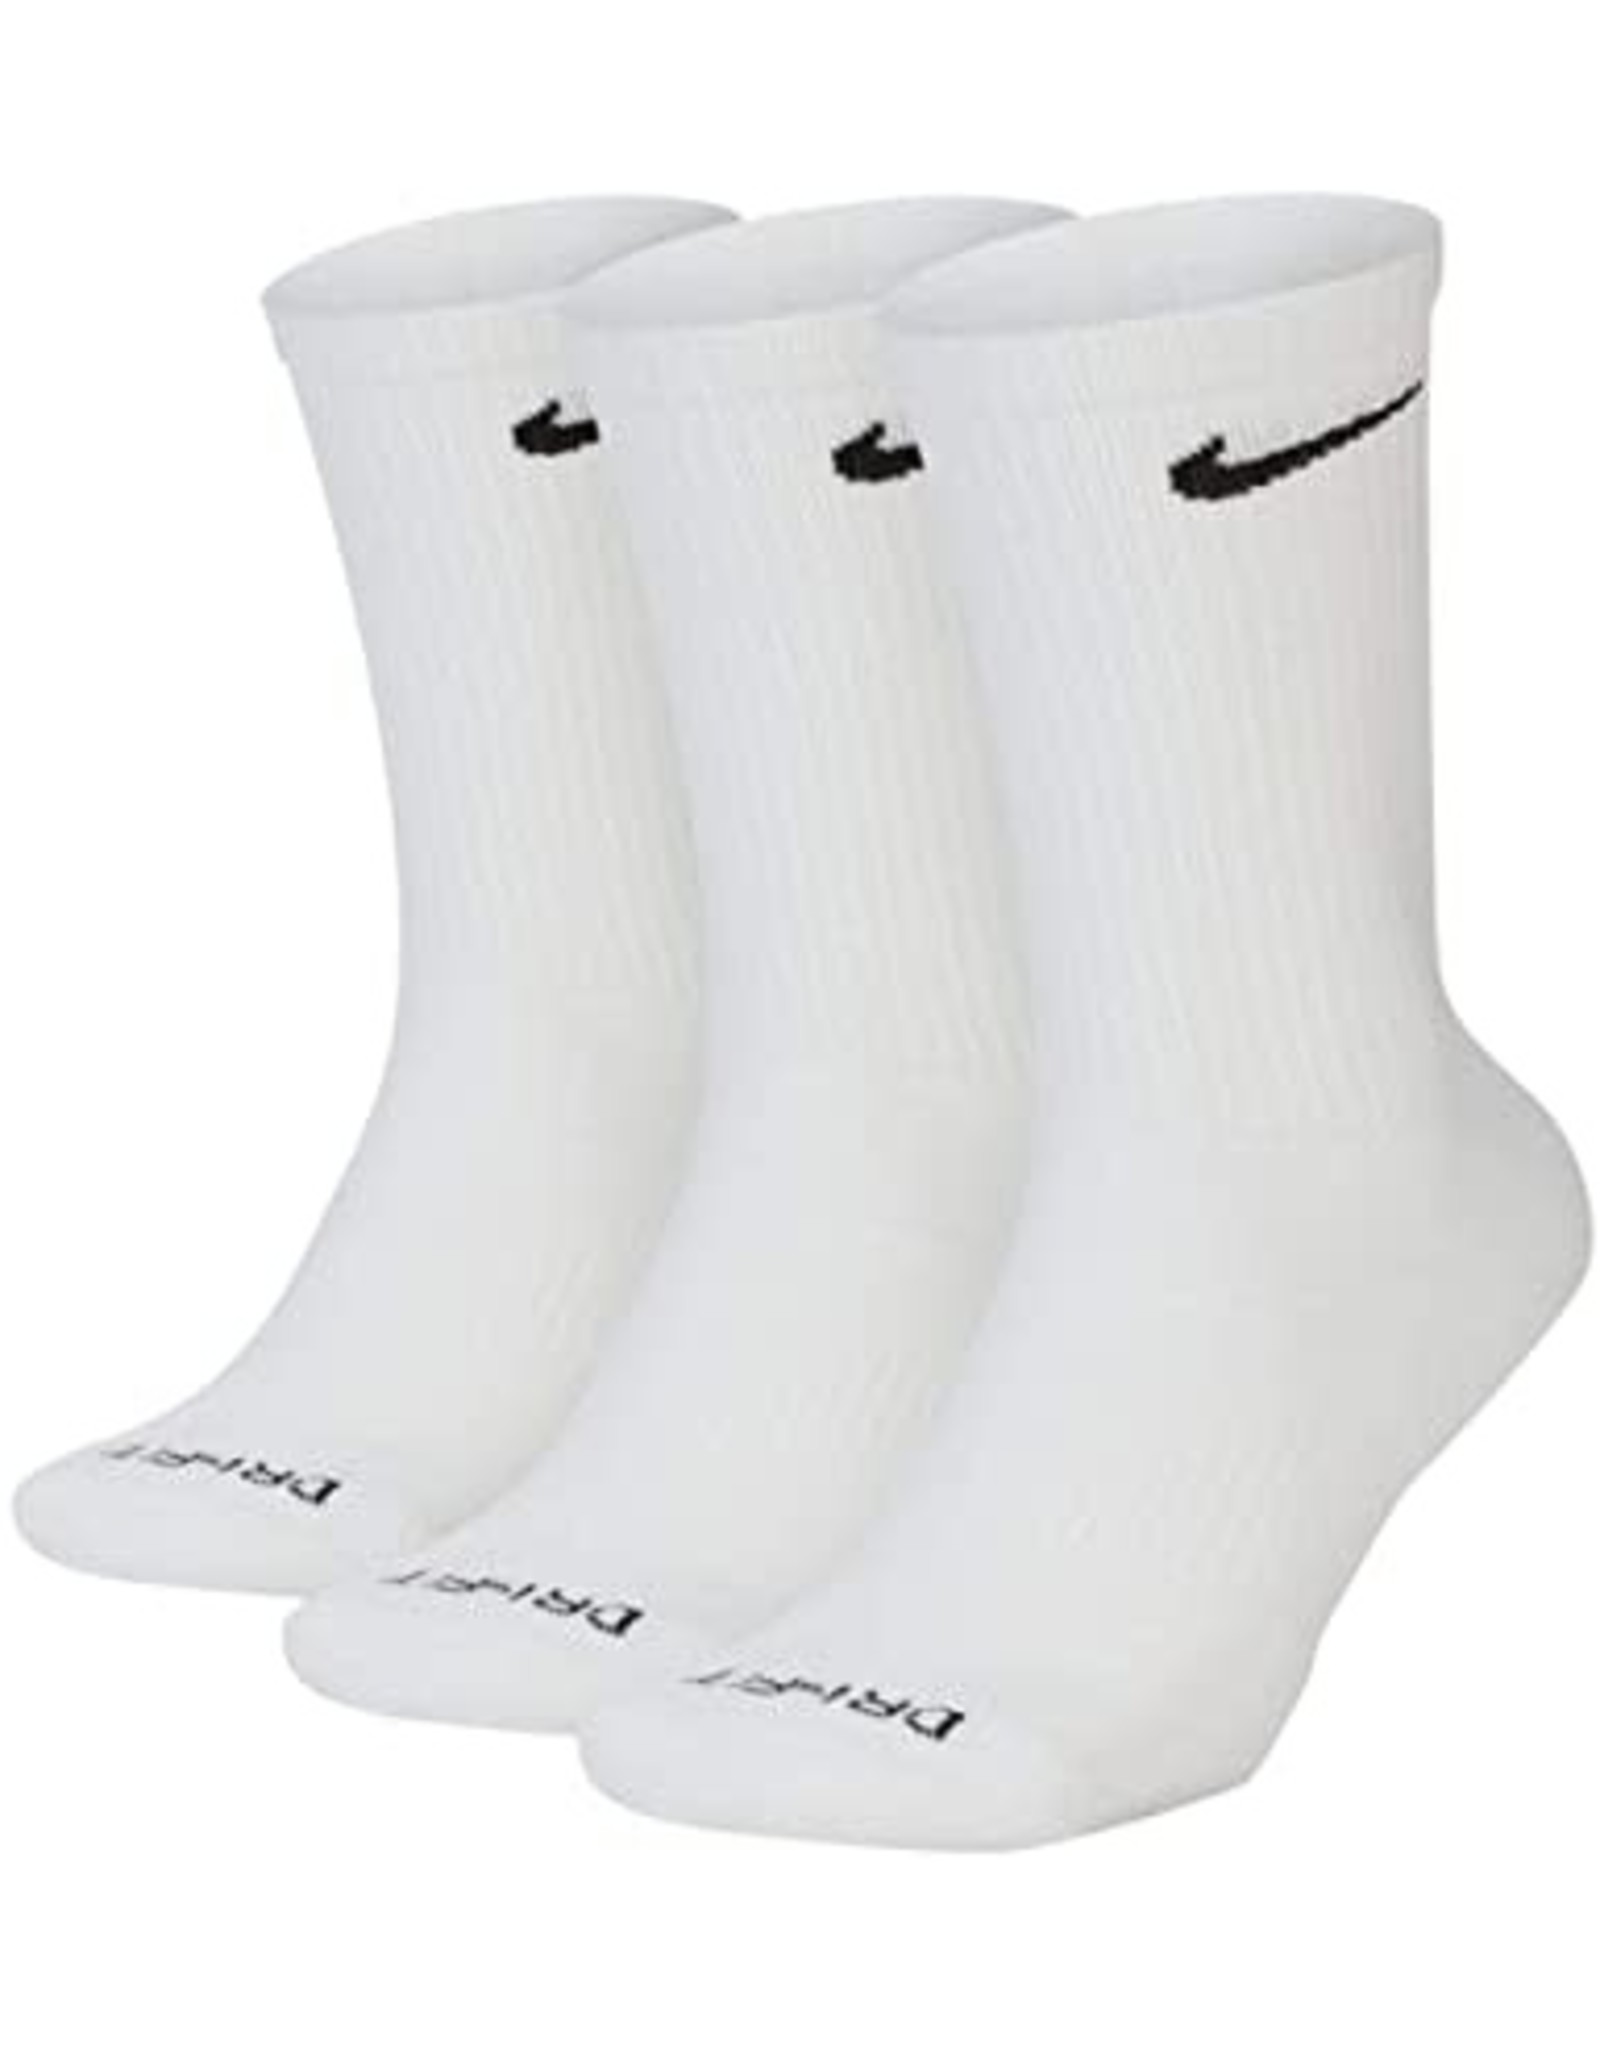 NIKE Socks Nike Cotton Crew (3-pk)